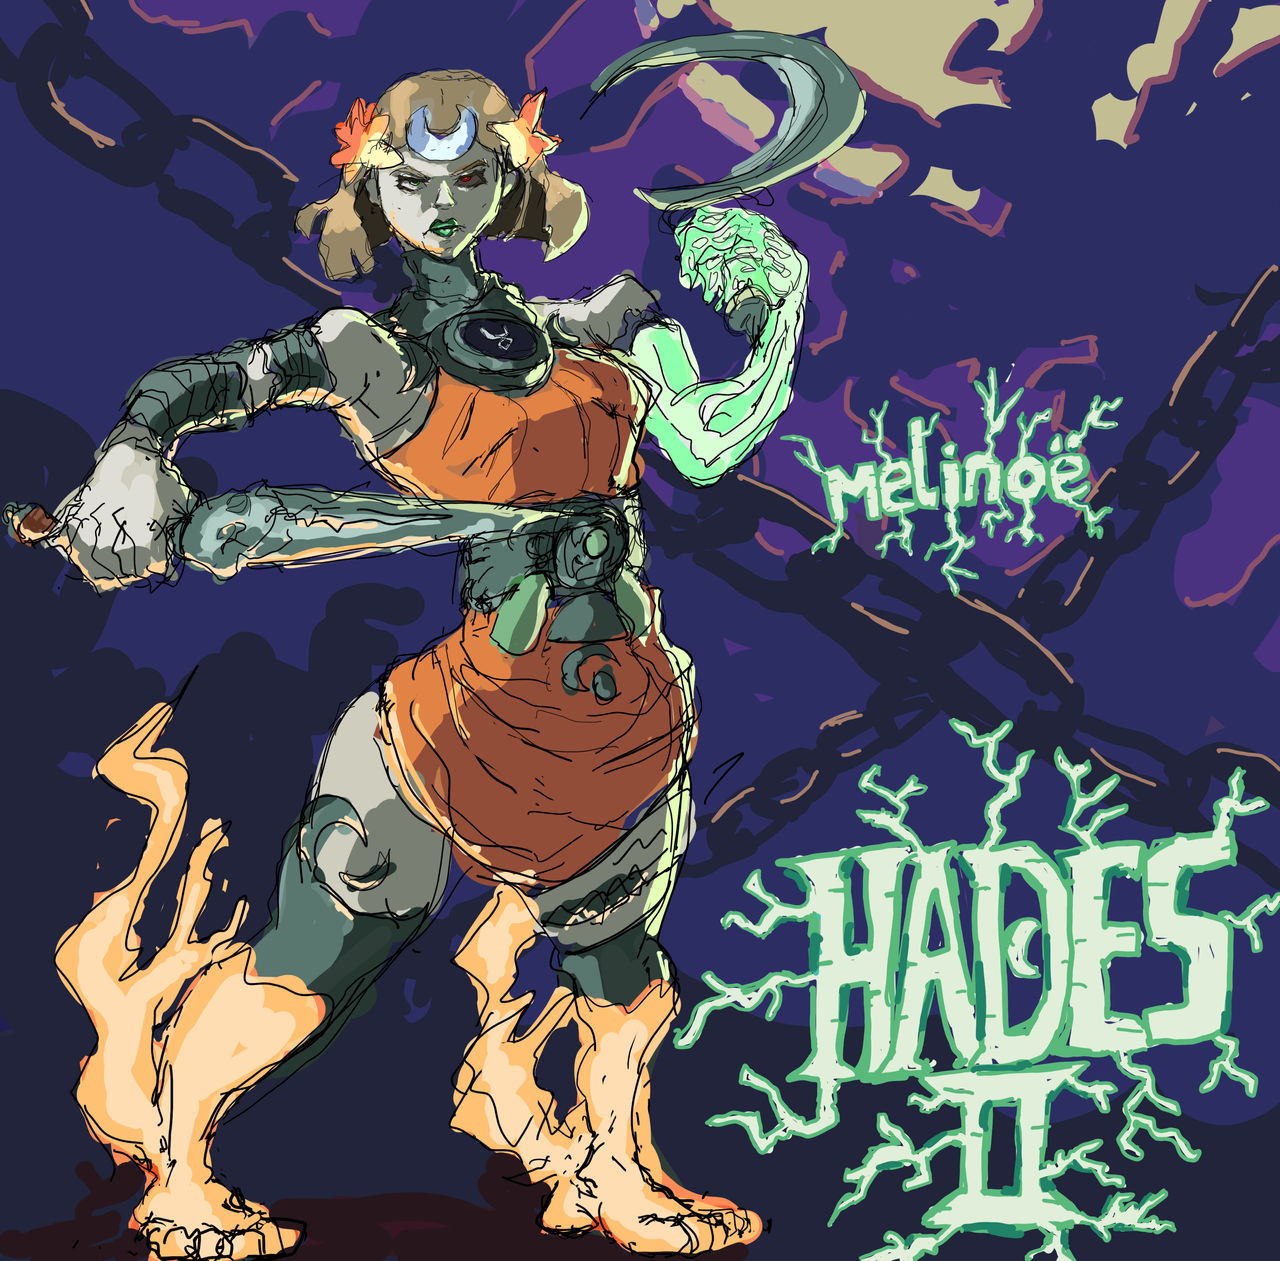 Characters/Hades II